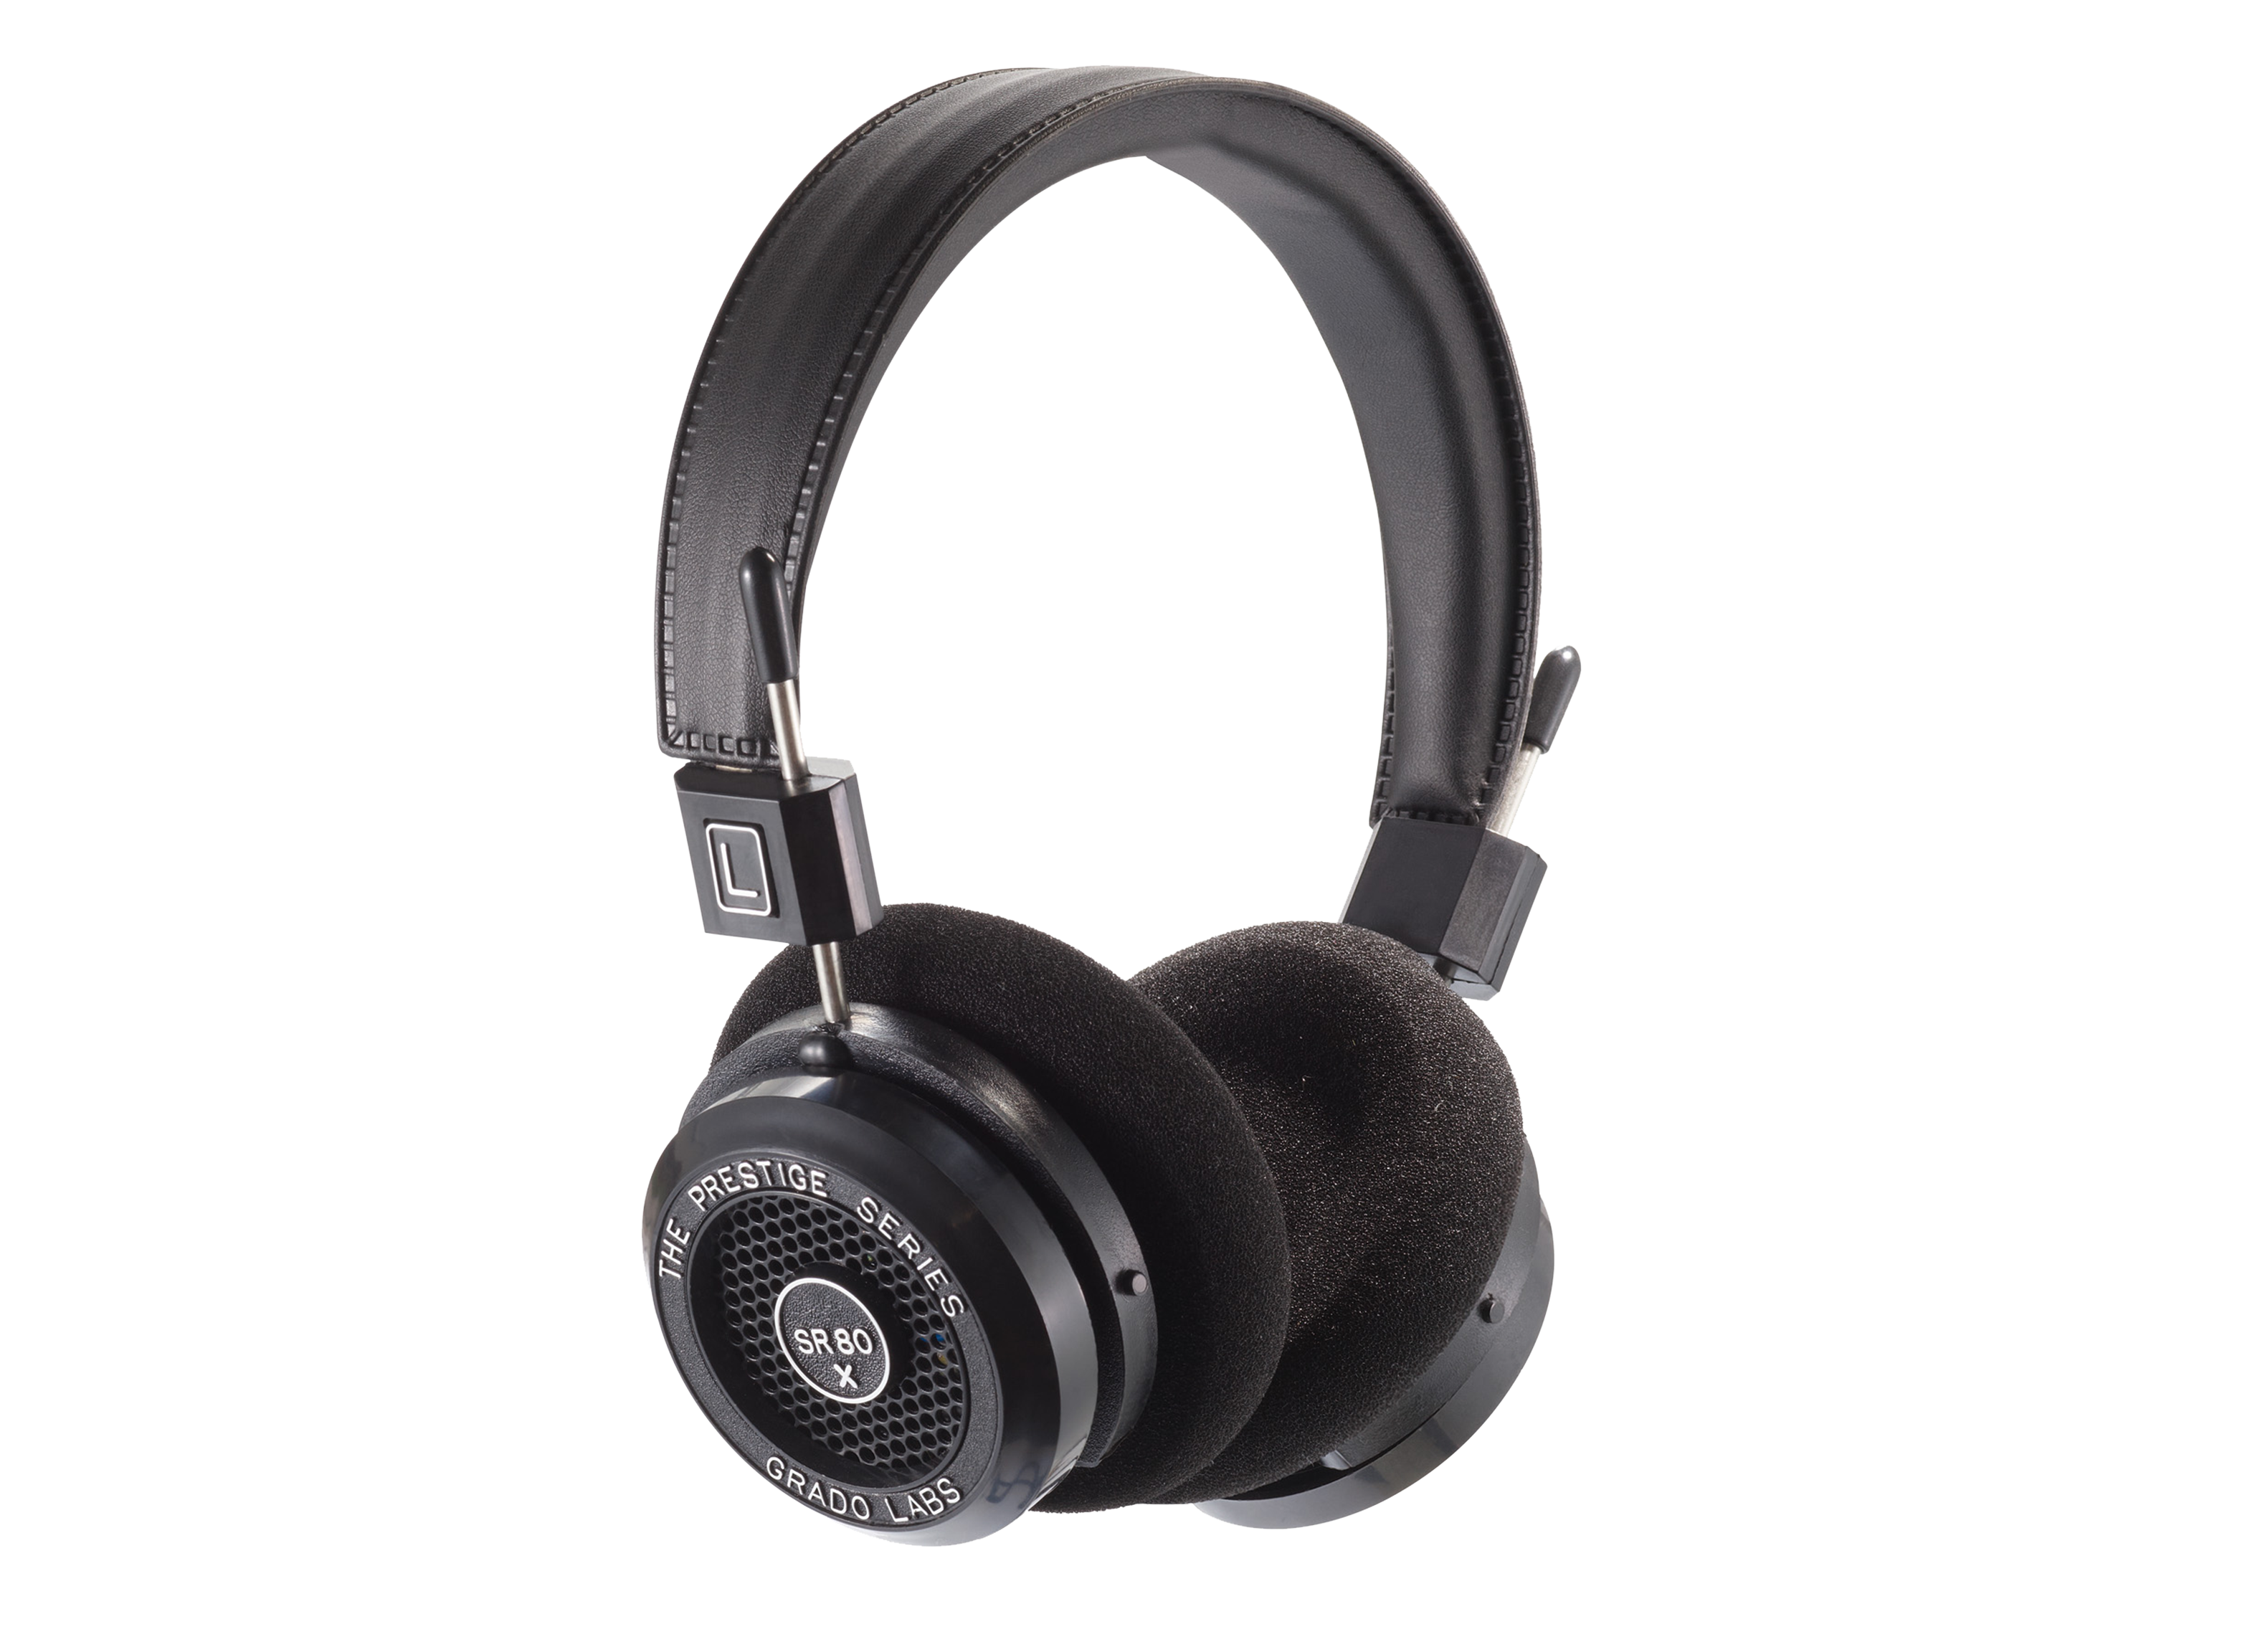 Grado SR80x Headphone Review - Consumer Reports